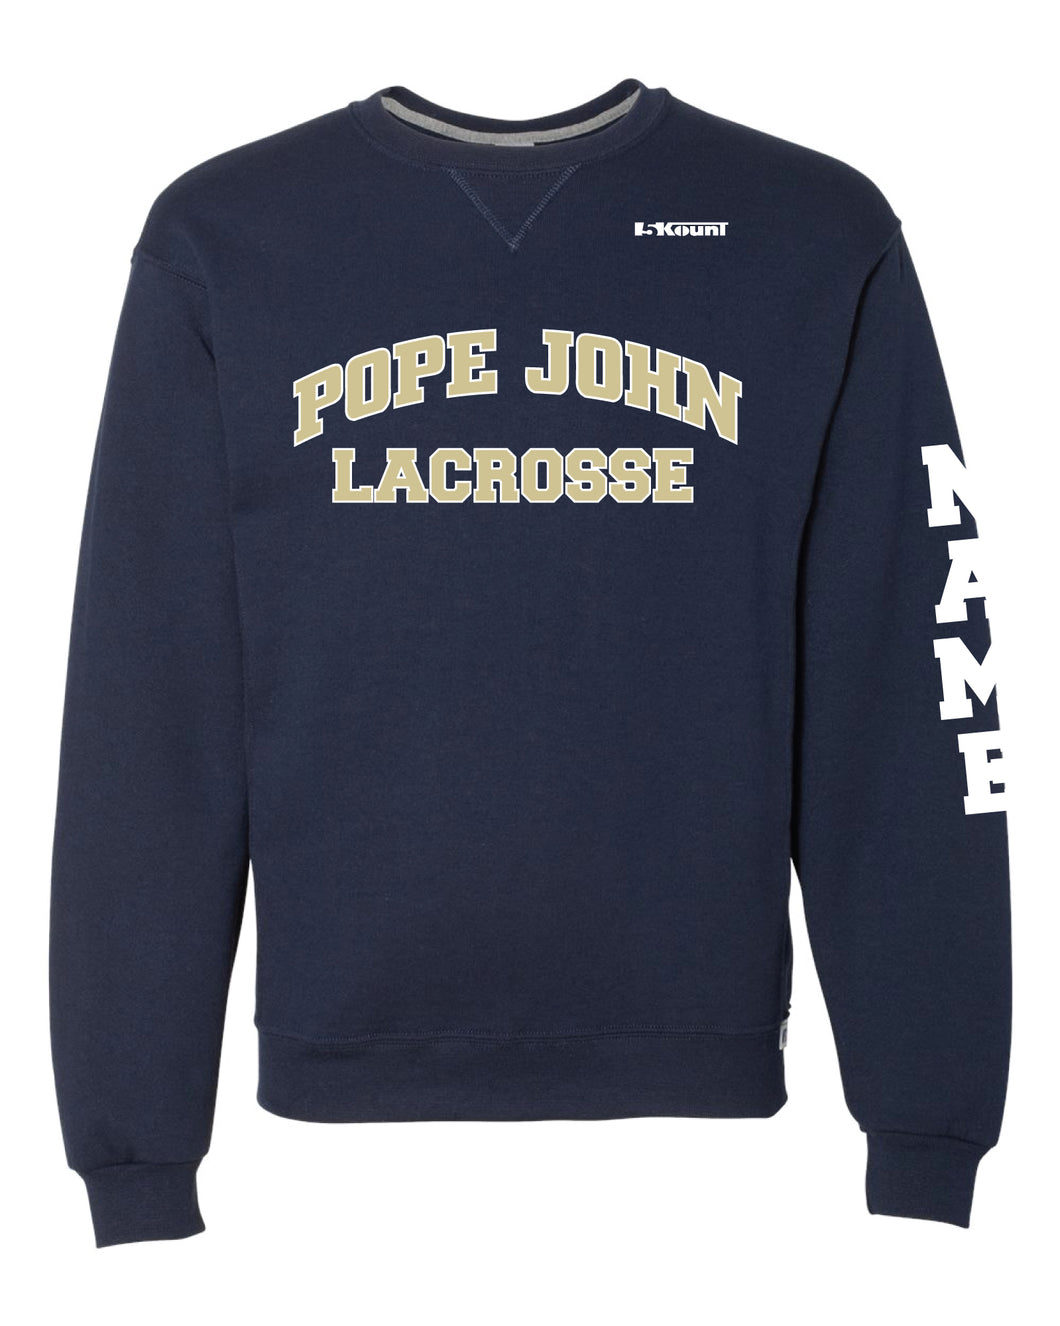 Pope John Lax Russell Athletic Cotton Crewneck Sweatshirt - Navy - 5KounT2018